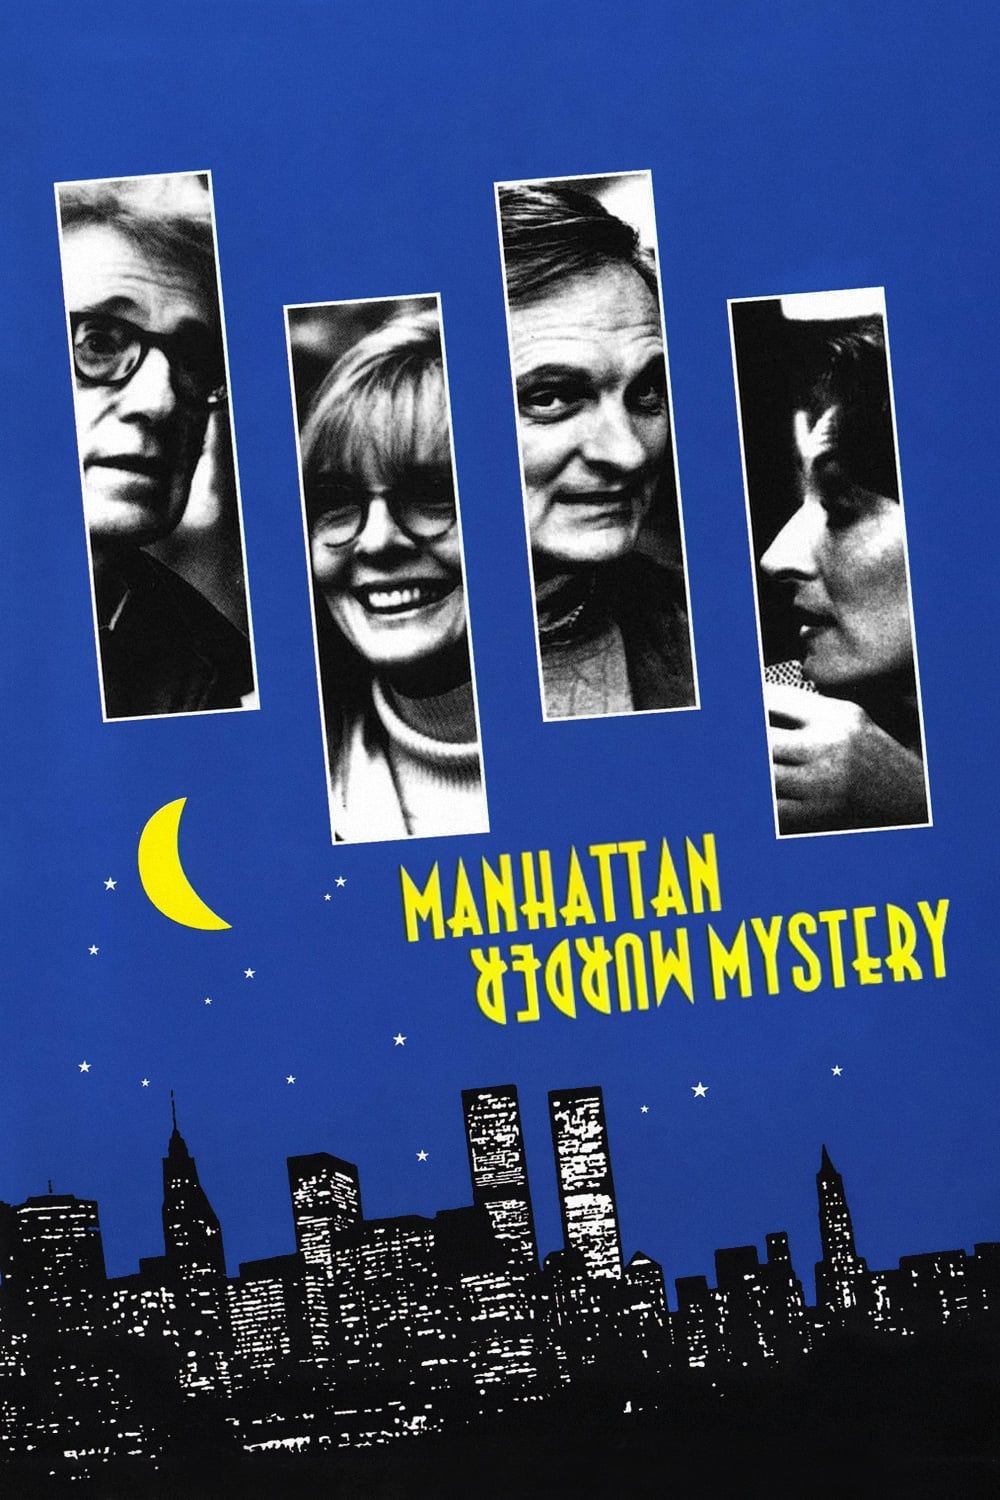 Manhattan Murders Mystery Streaming, Porcelain Dinnerware Set